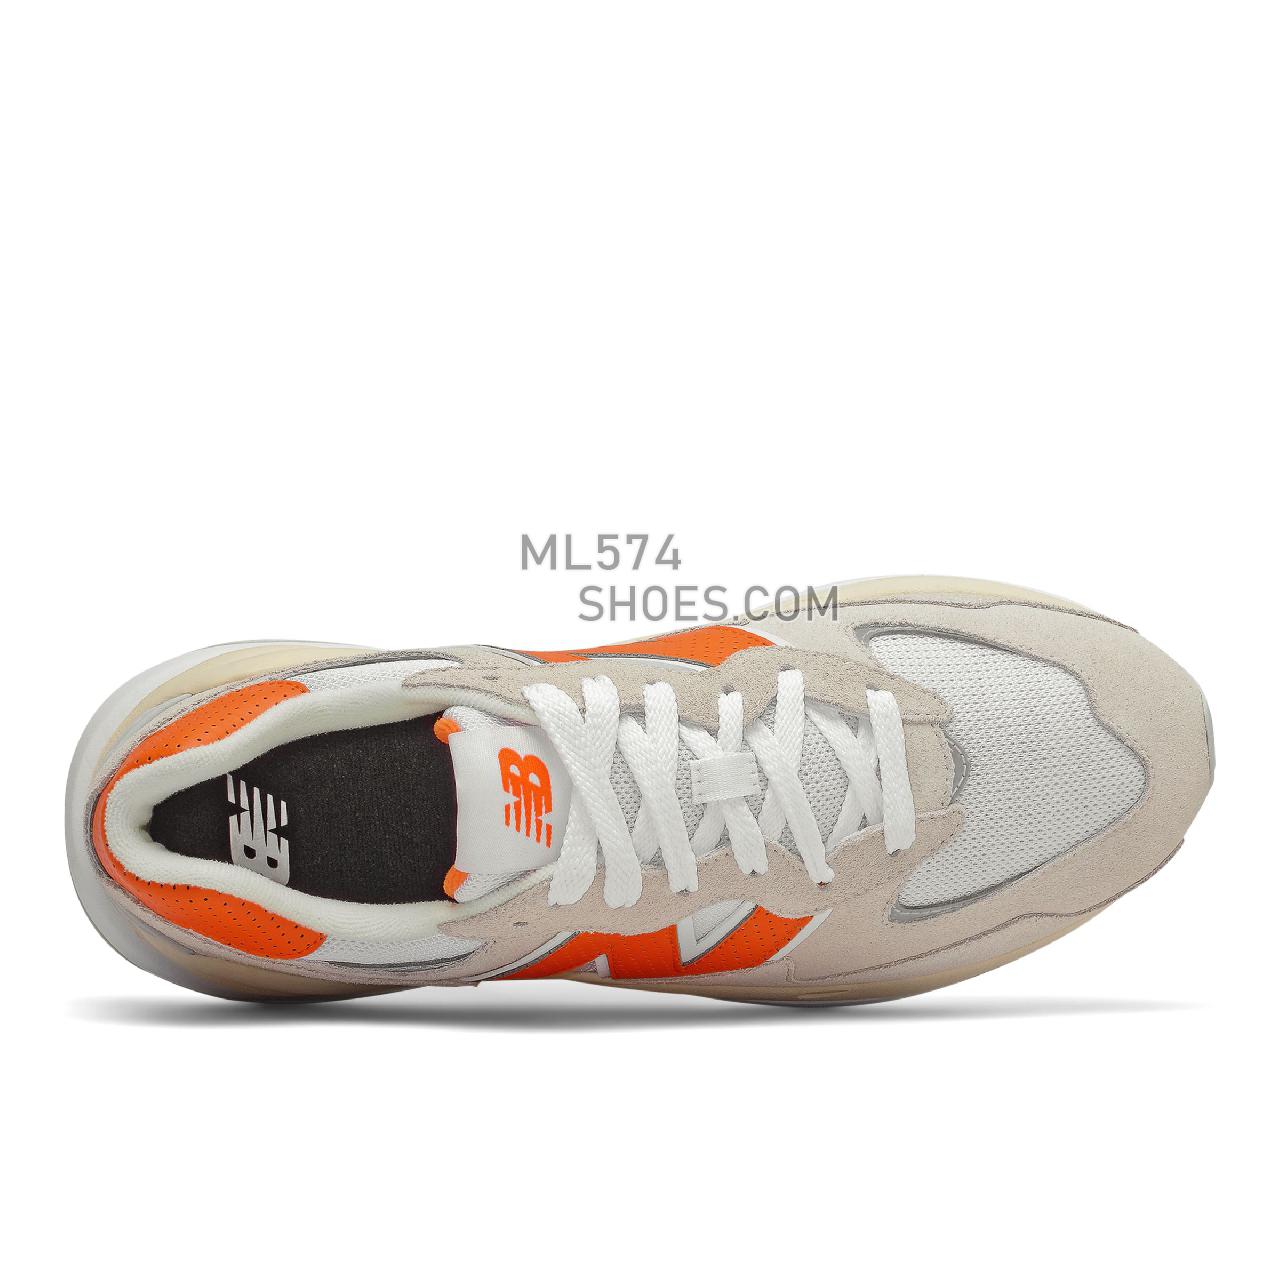 New Balance 57/40 - Men's Sport Style Sneakers - Sea Salt with Topaz - M5740SC1